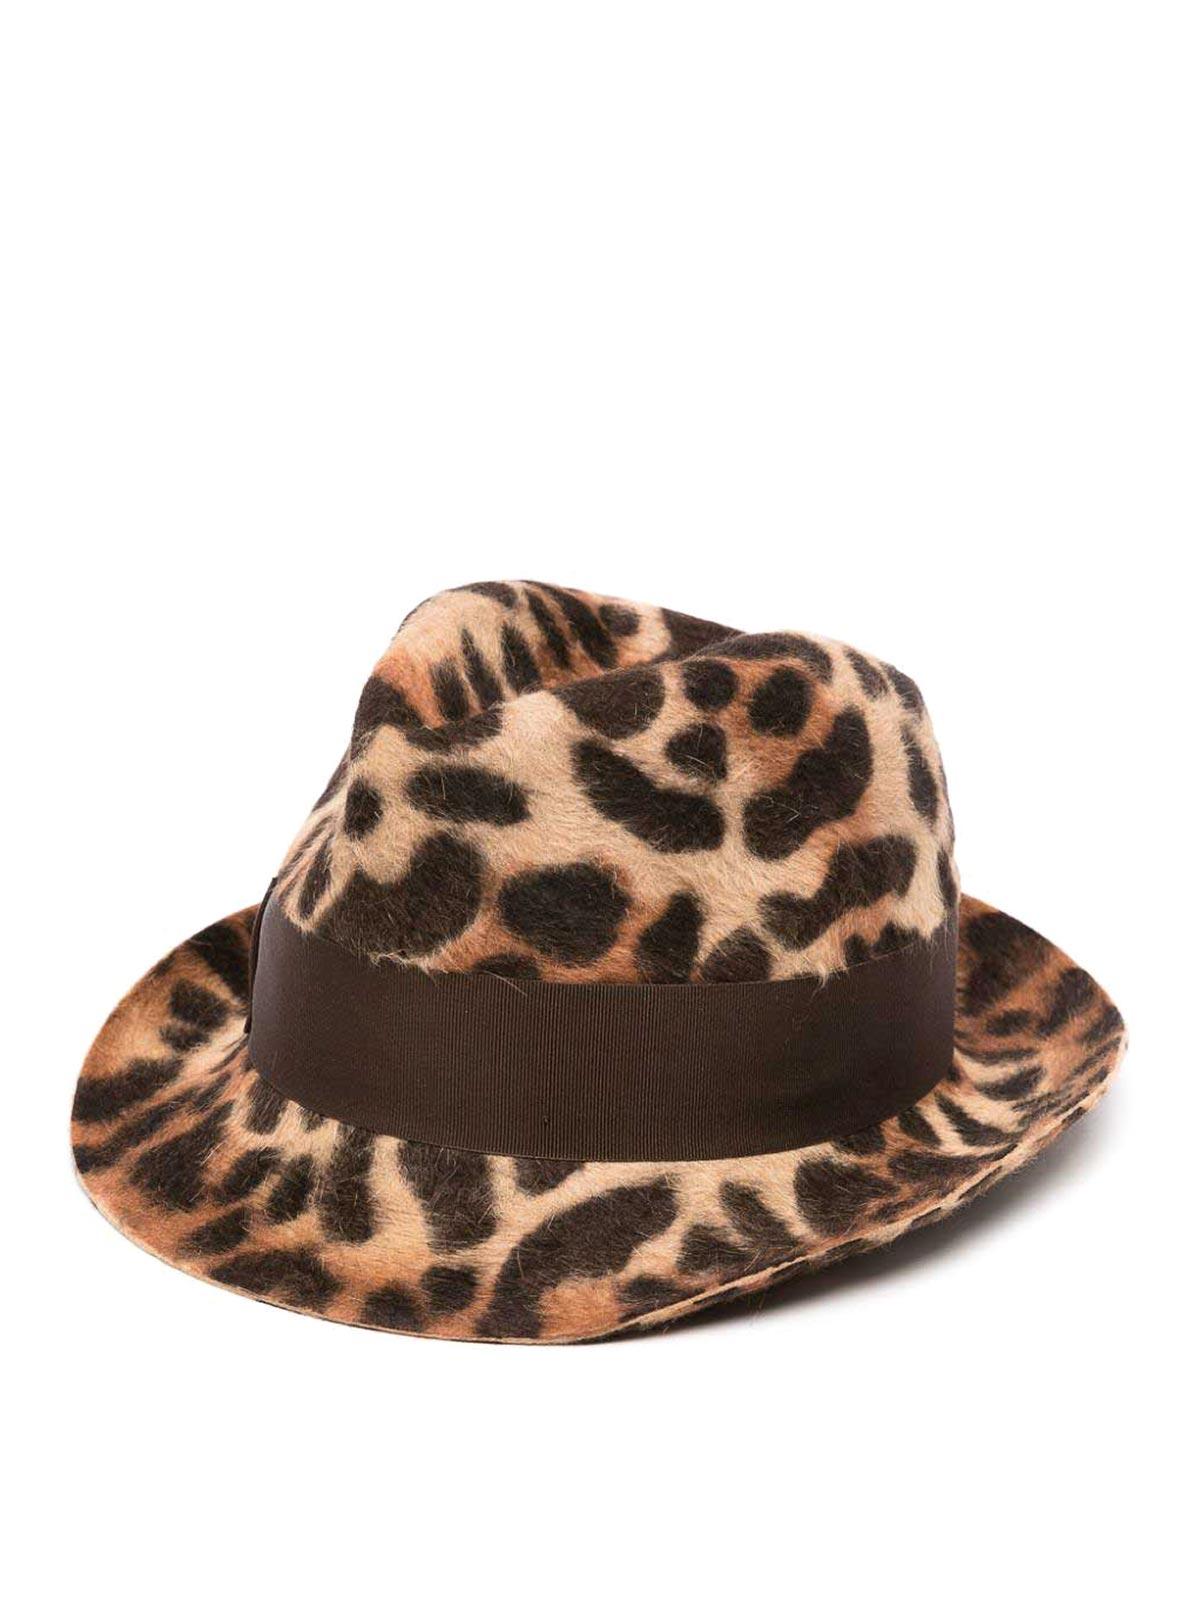 Borsalino Sophie Leopard Felt Fedora Hat in Brown | Lyst